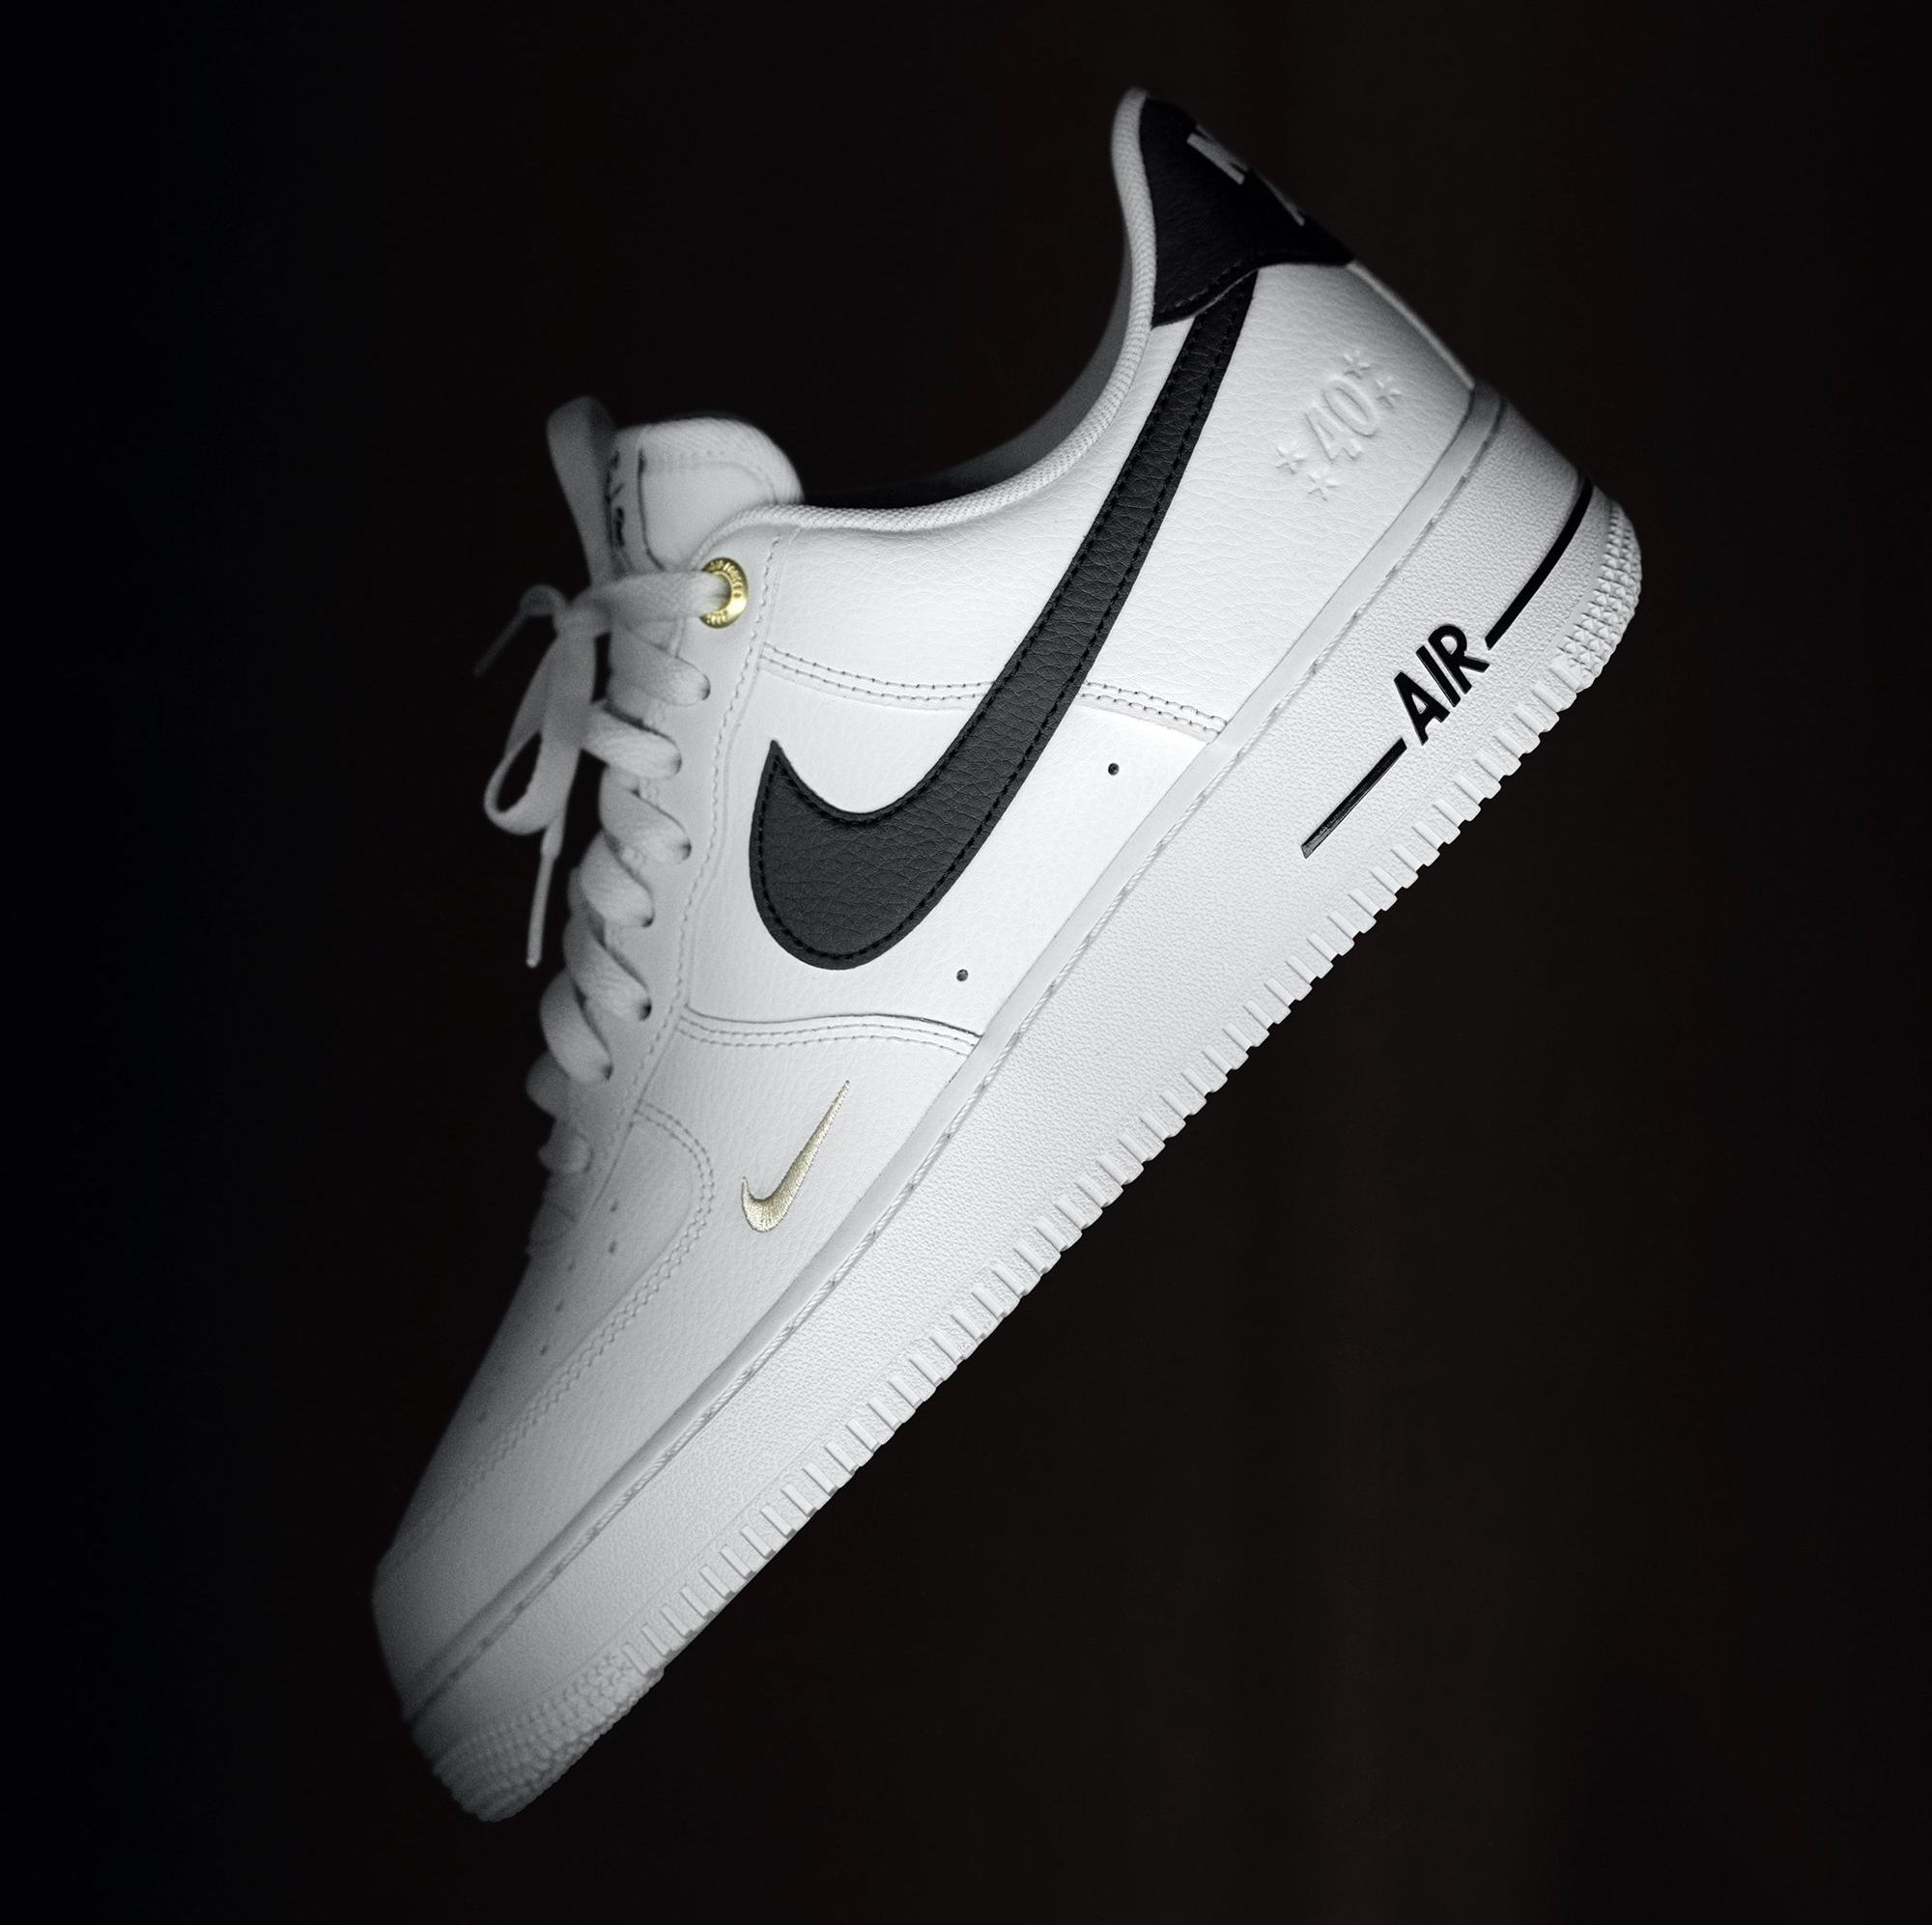 Sneakers Release – Nike Air Force 1 LV8 2 “Black